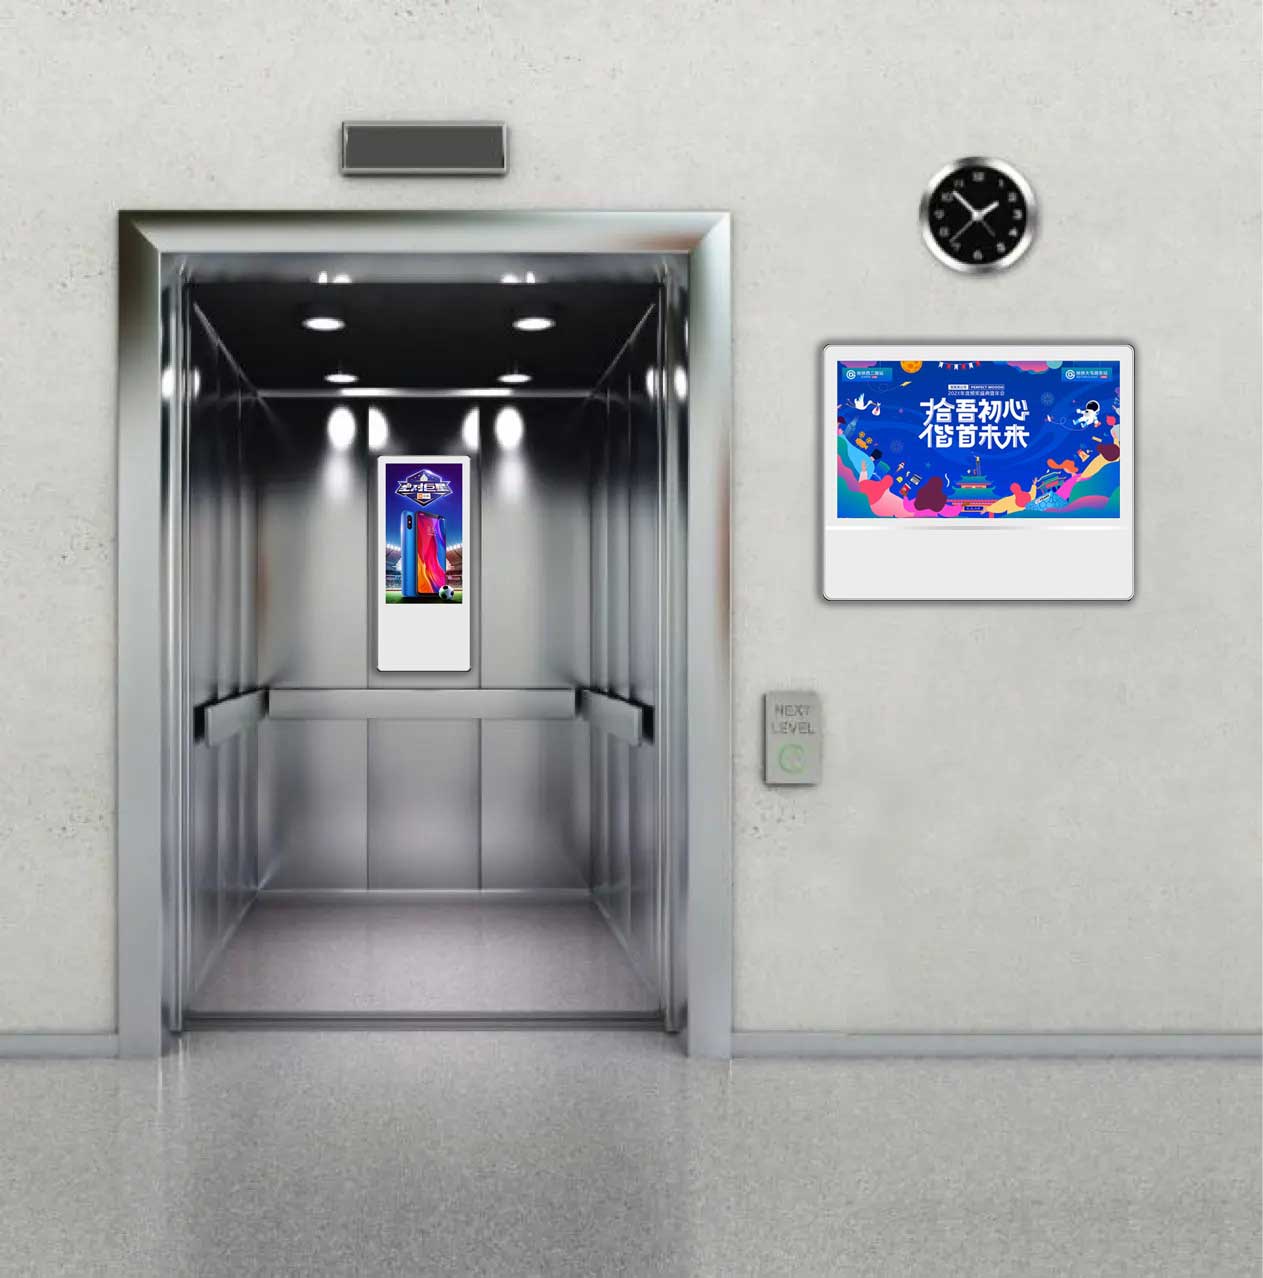 Tela de publicidade digital da cabine de elevador